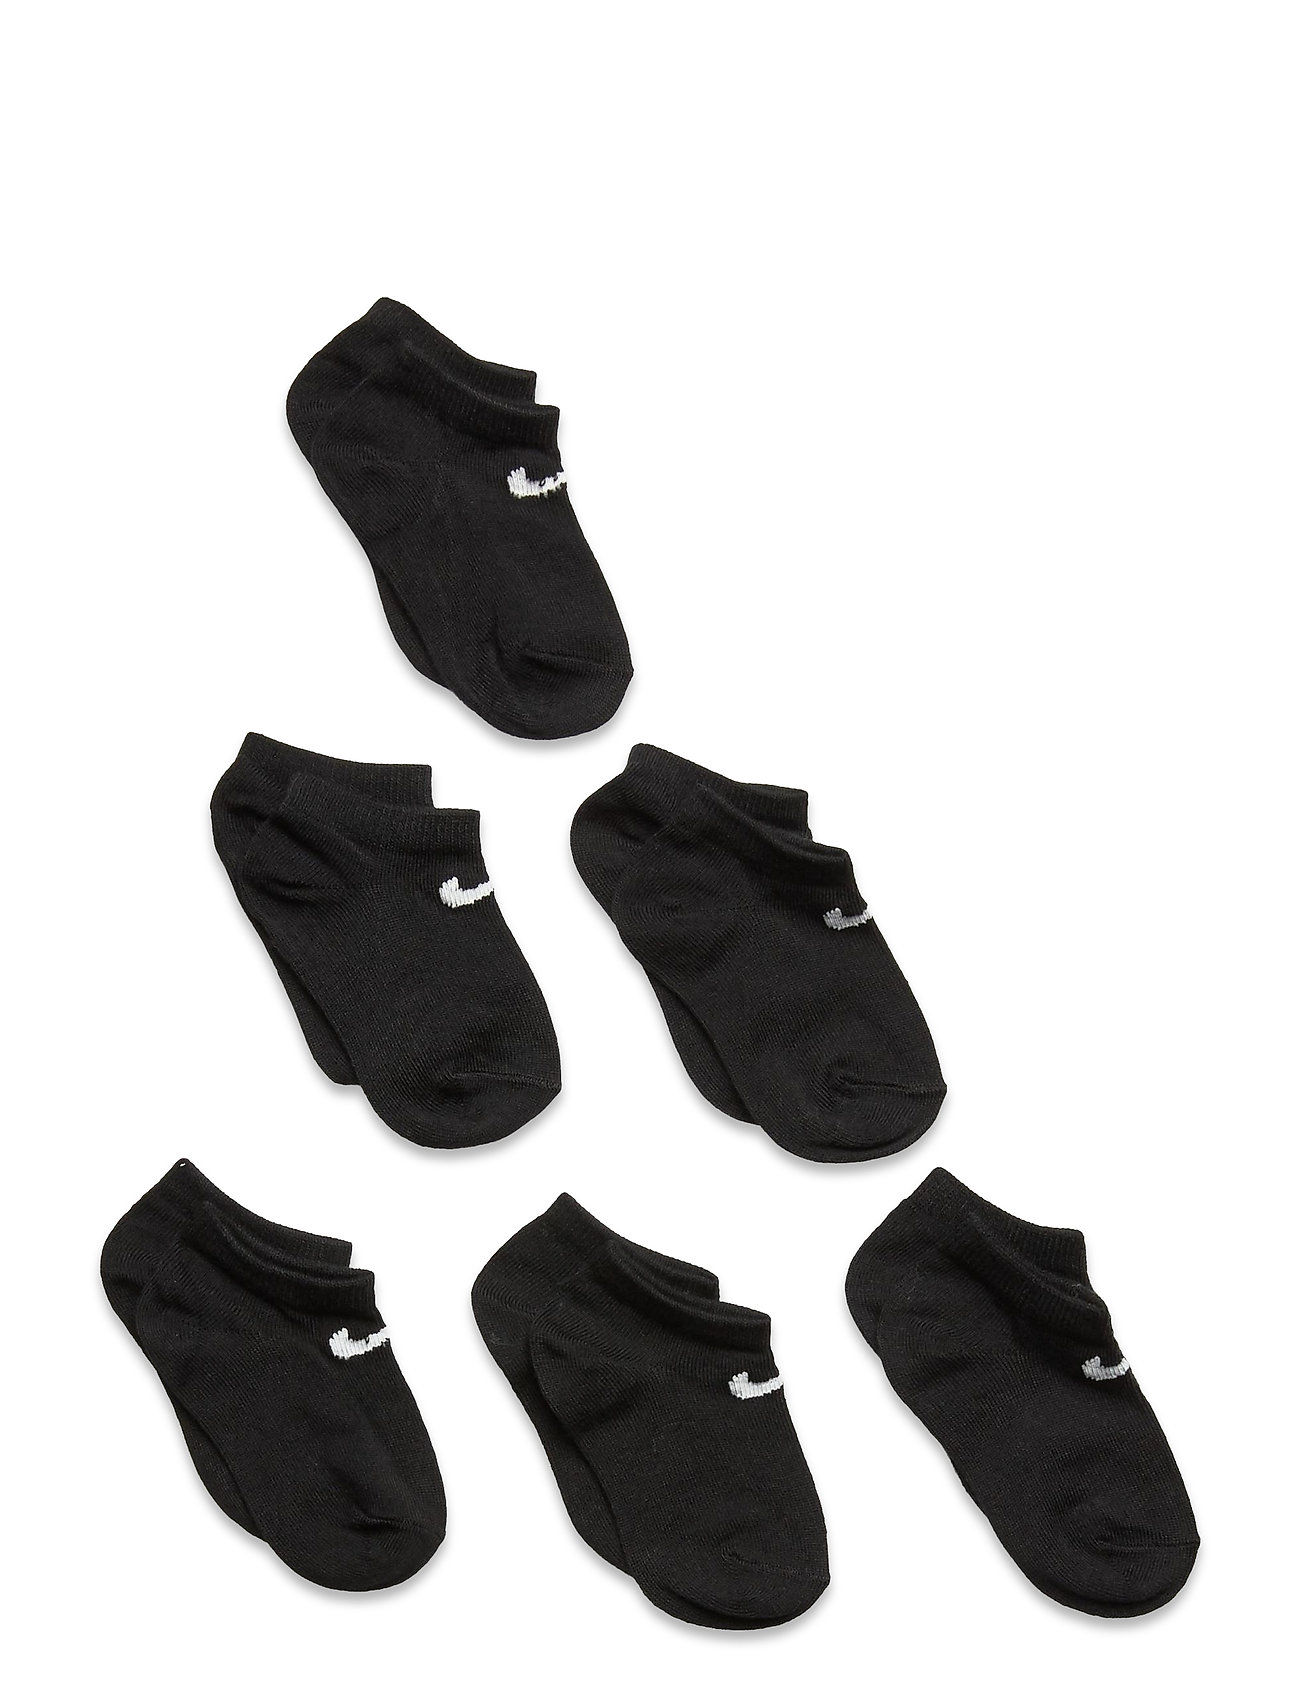 Nhn Nike Colorful Pack Low / Nhn Nike Colorful Pack Low Sport Socks & Tights Socks Black Nike